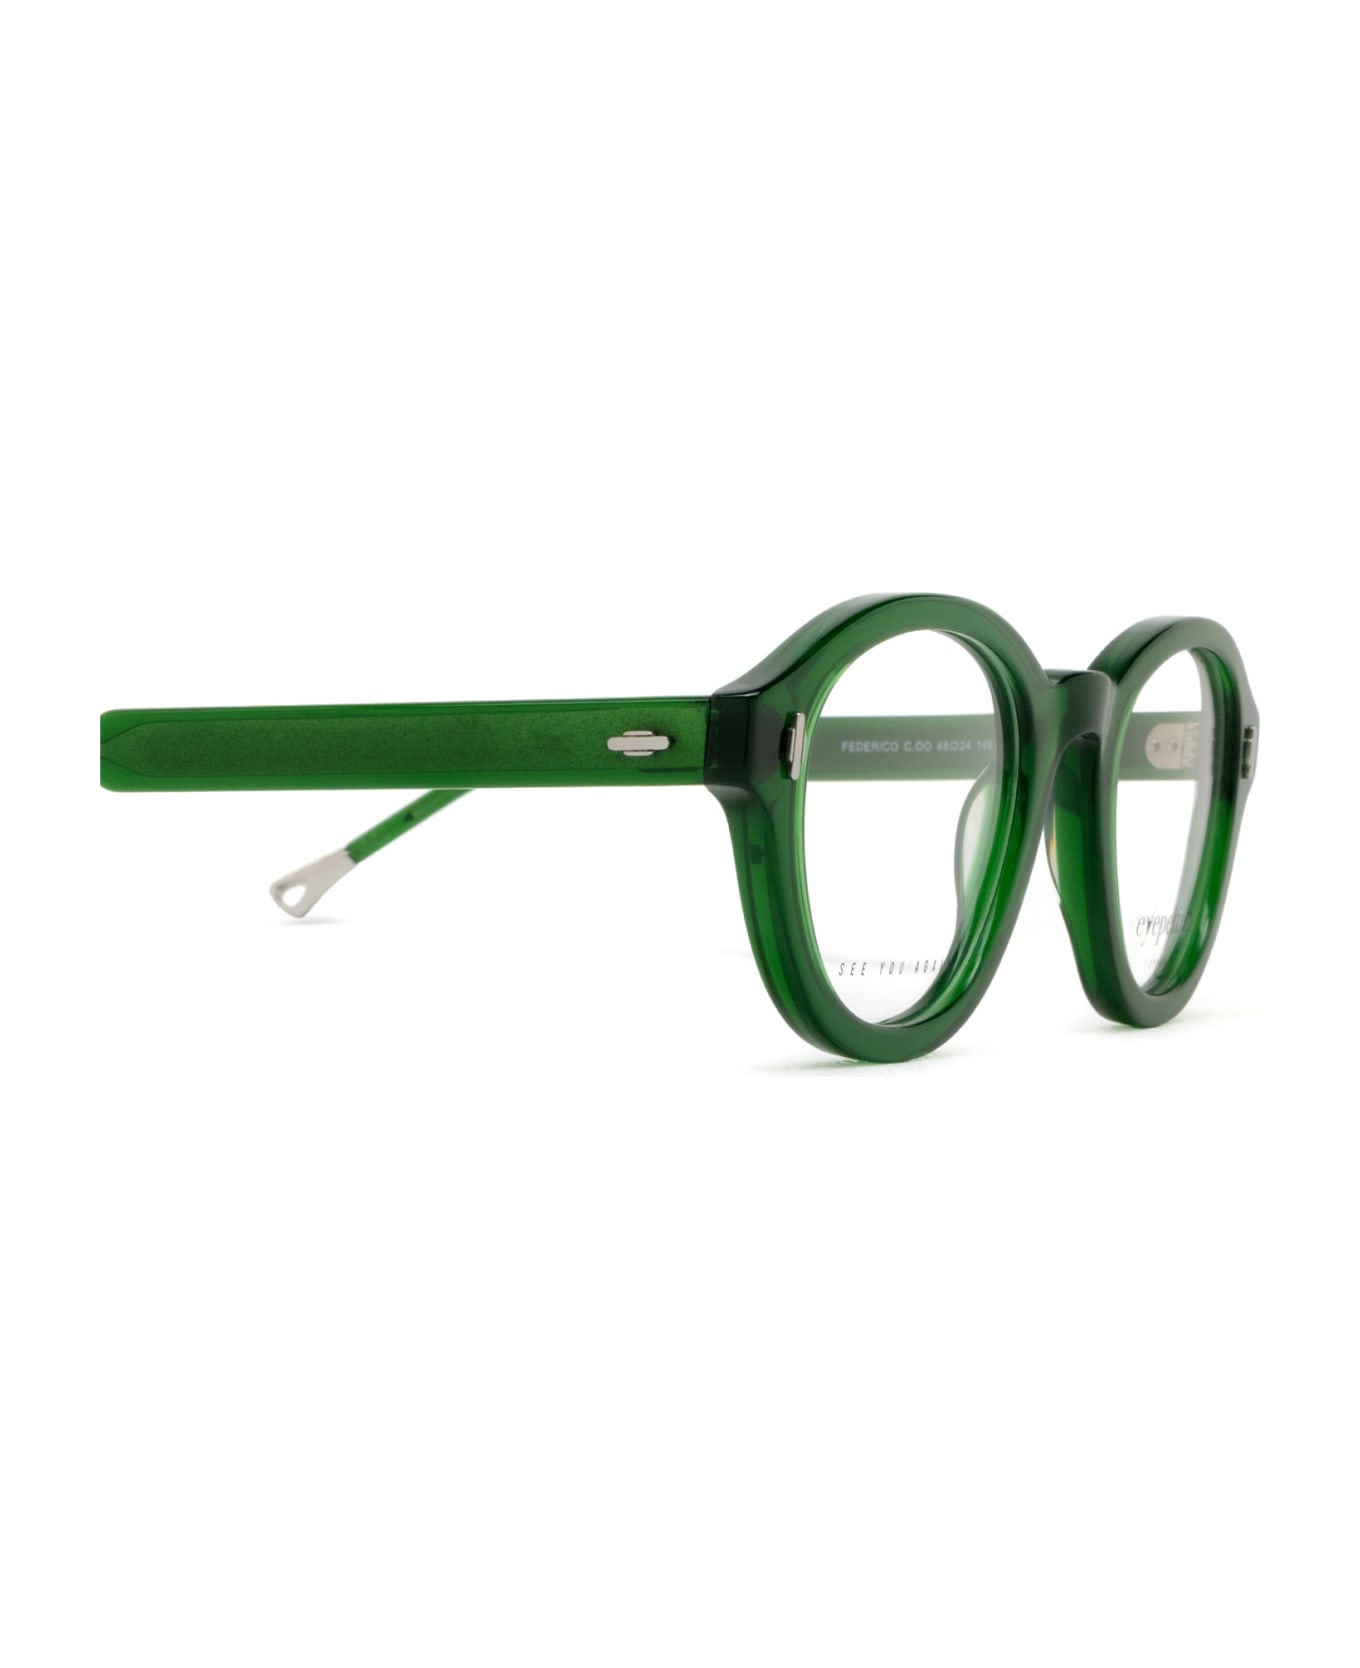 Eyepetizer Federico Transparent Green Glasses - Transparent Green